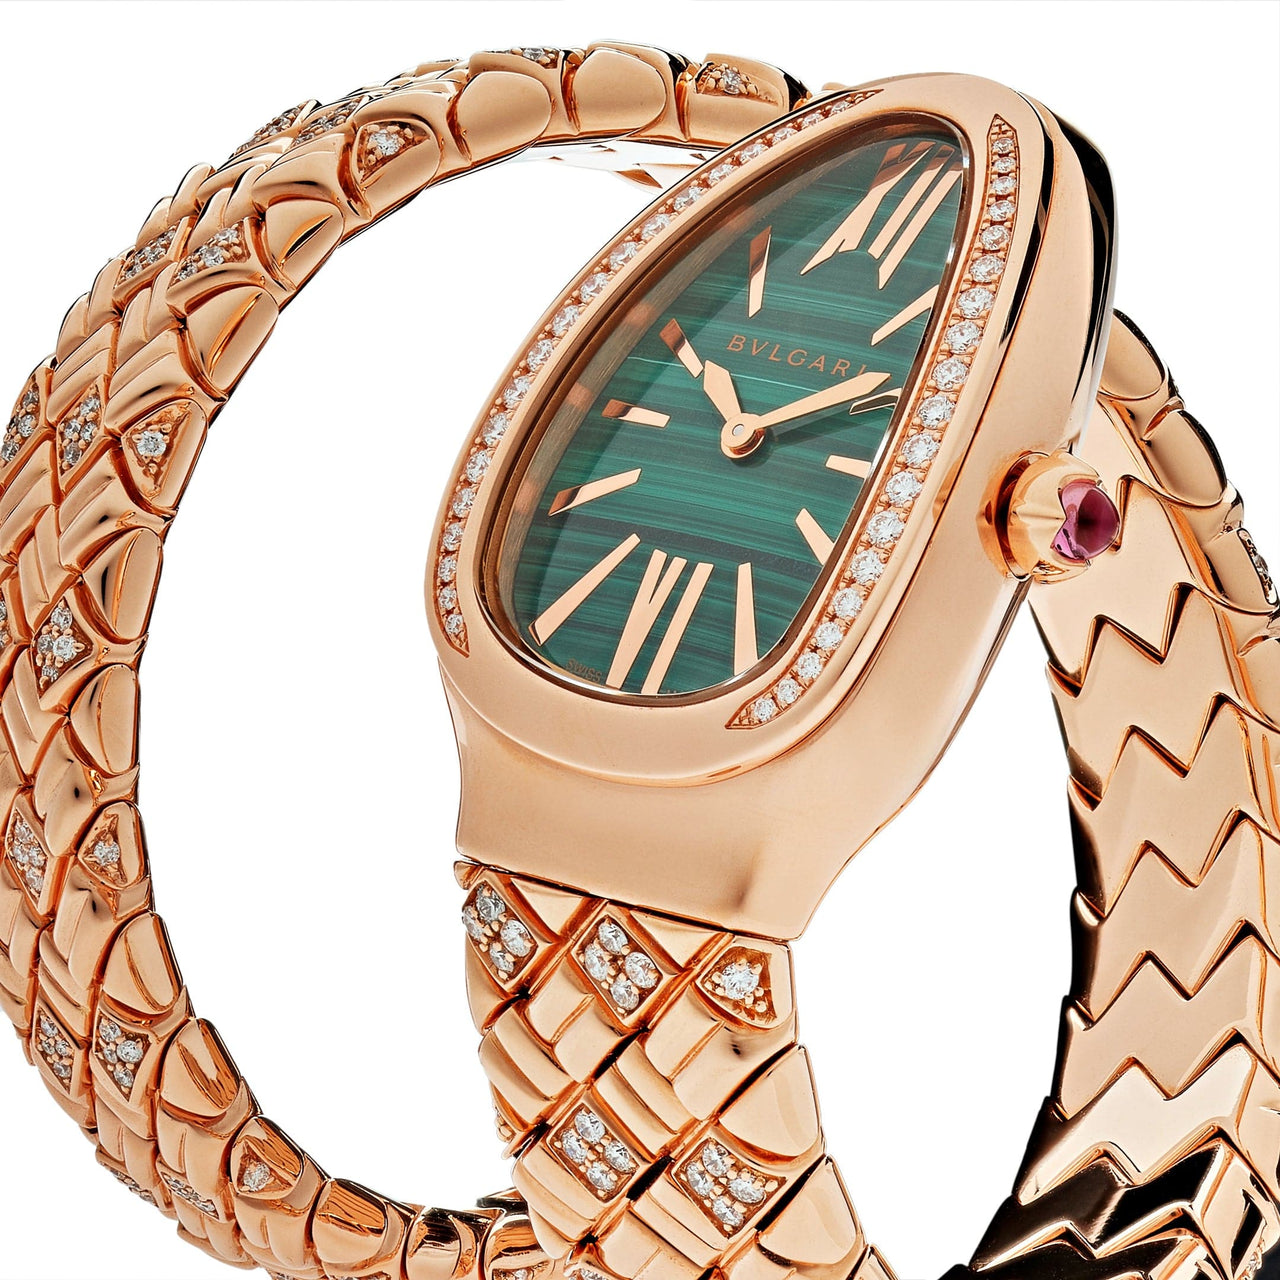 Luxury Watch Bvlgari Serpenti Spiga Rose Gold Malachite Dial Diamond Watch 103626 Wrist Aficionado